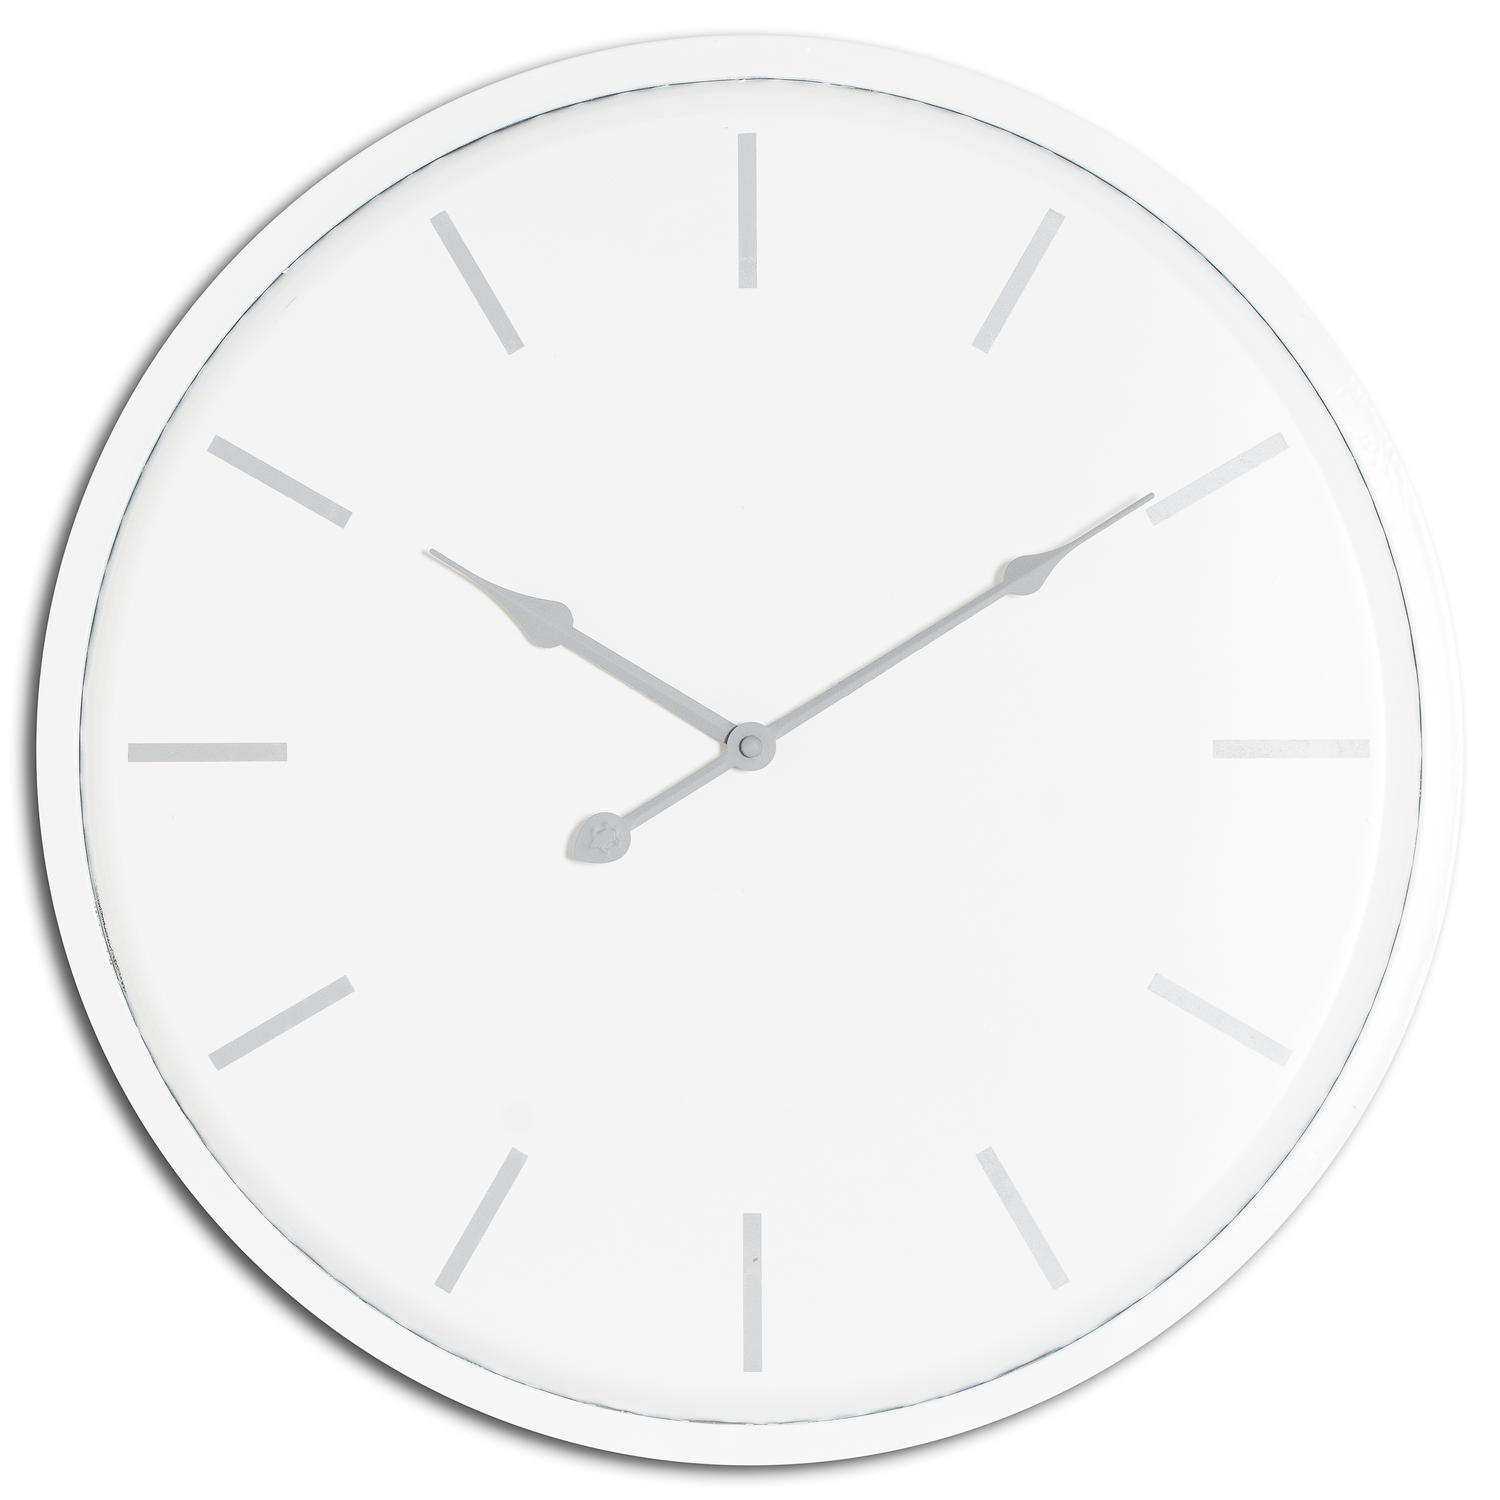 Brandon Wall Clock - Image 1